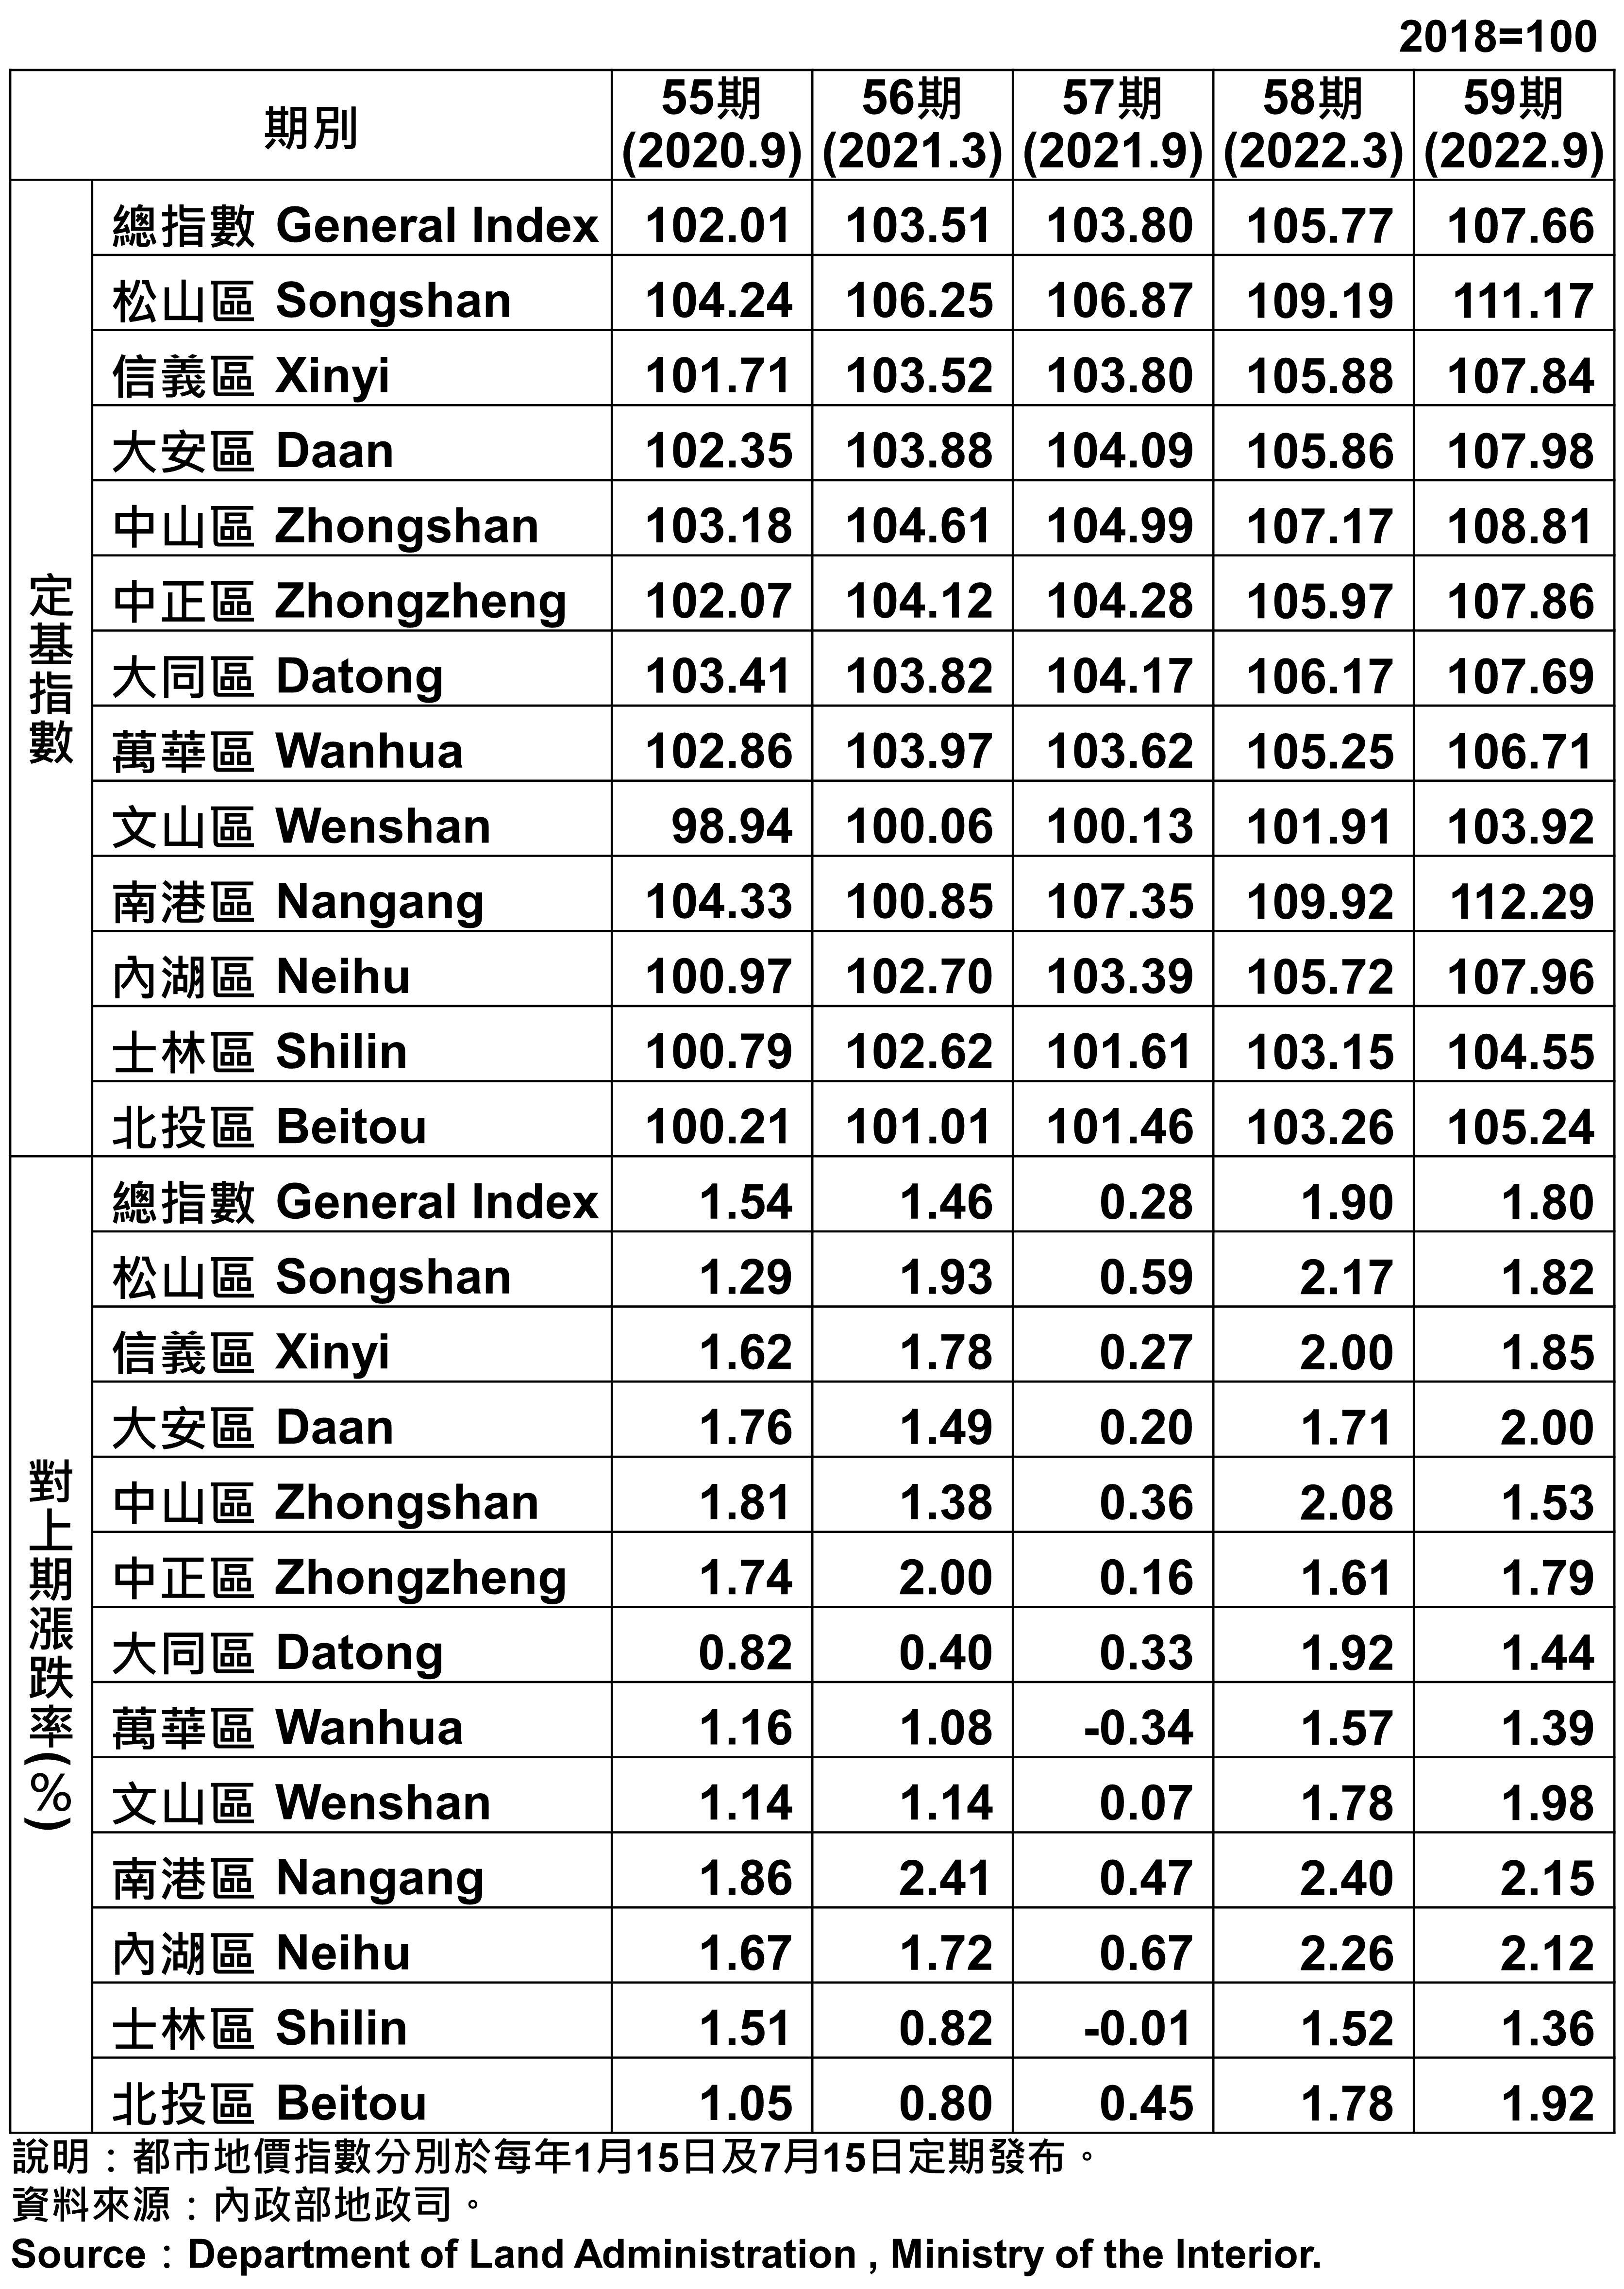 臺北市都市地價指數分區表—59期 Taipei's Urban Land Price Indexes by Districts—59th